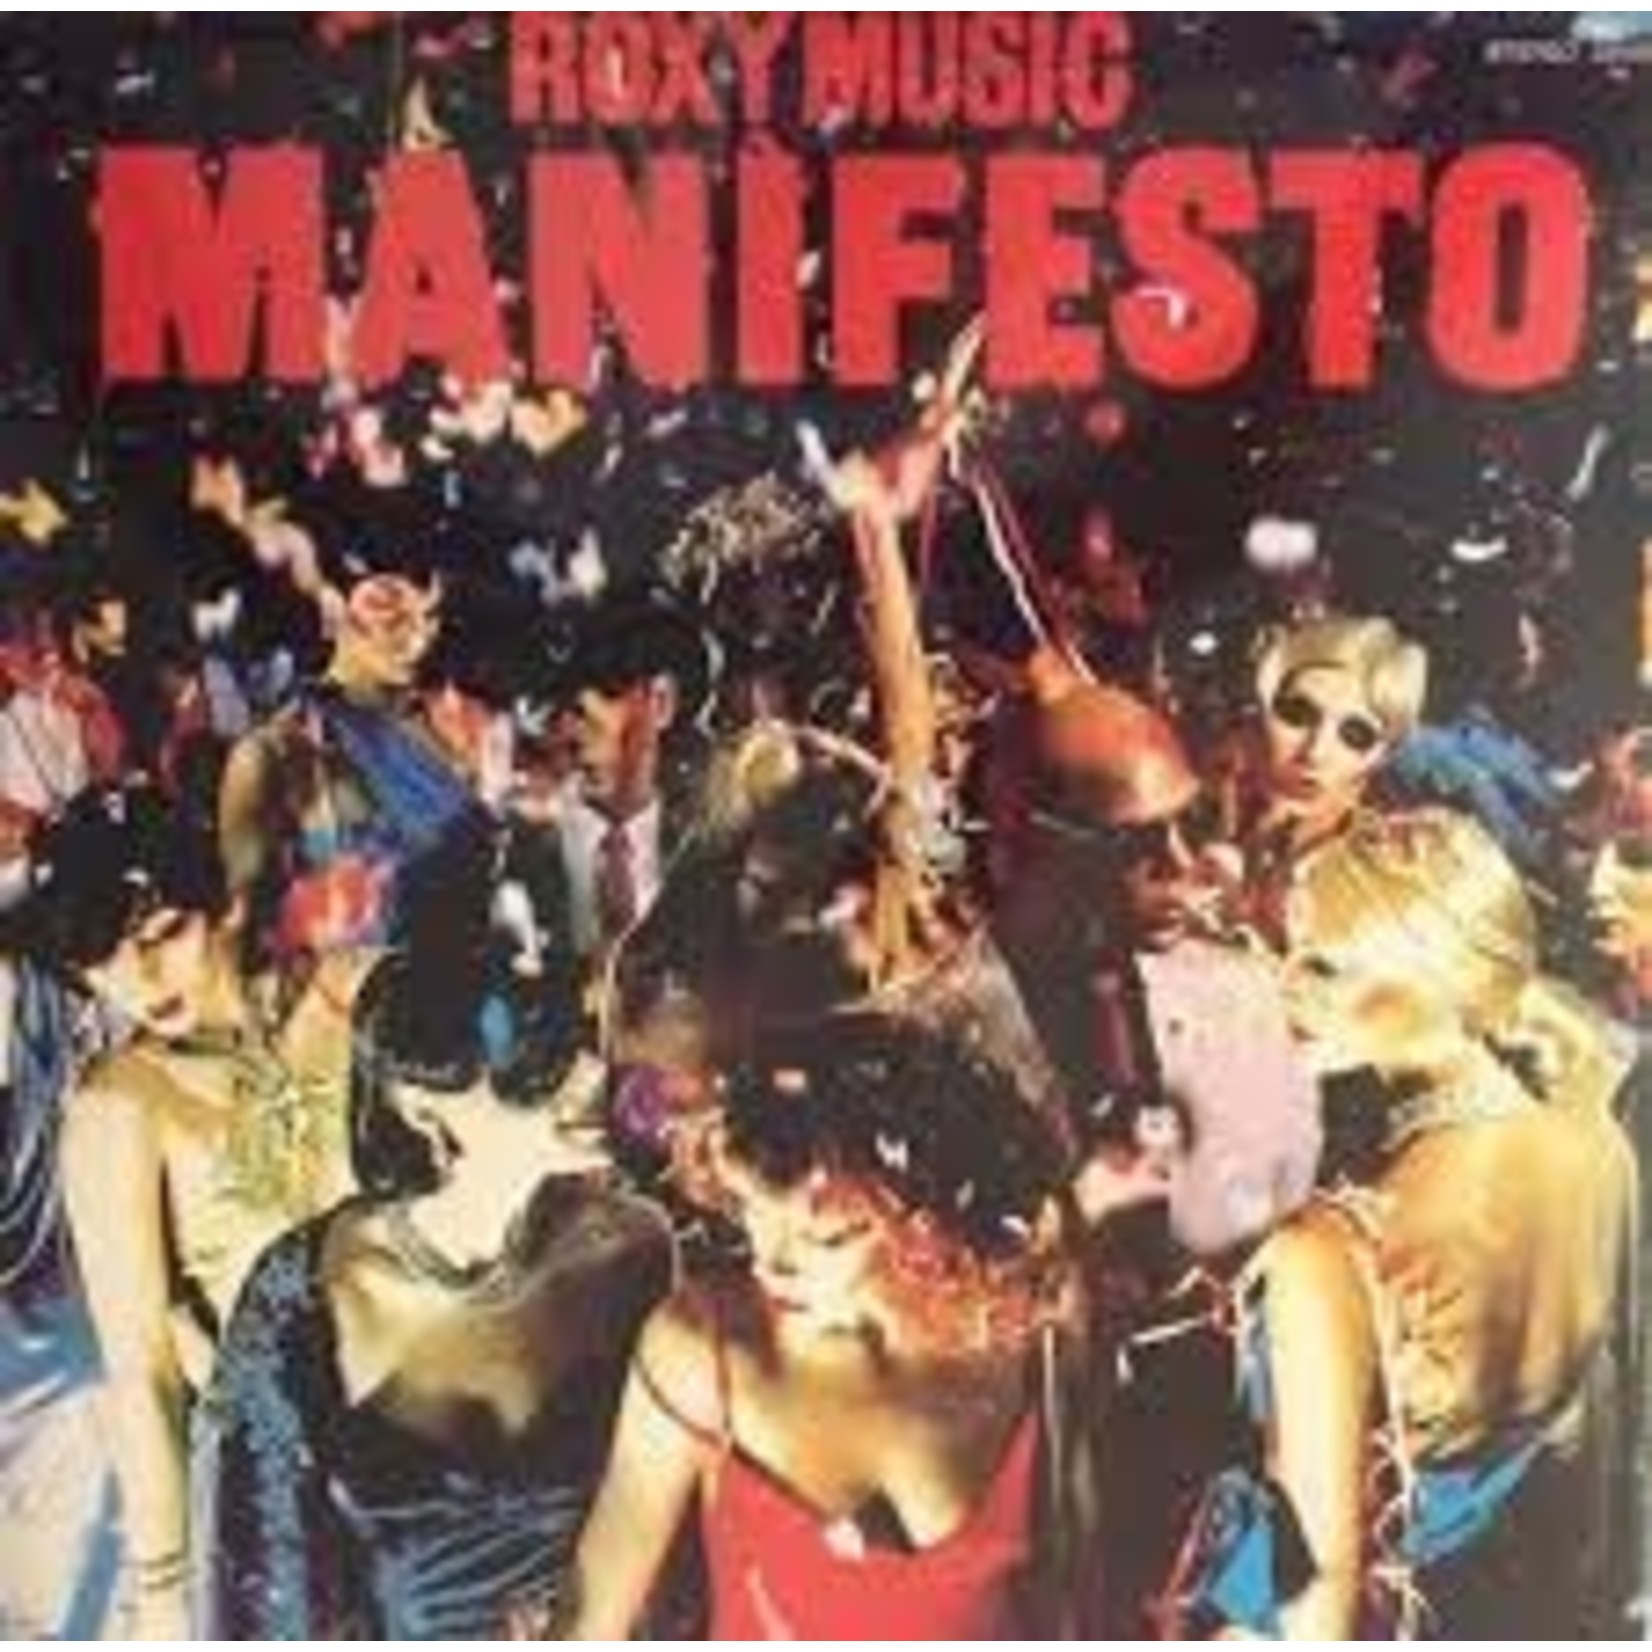 ROXY MUSIC - manifesto Lp (original pressing)